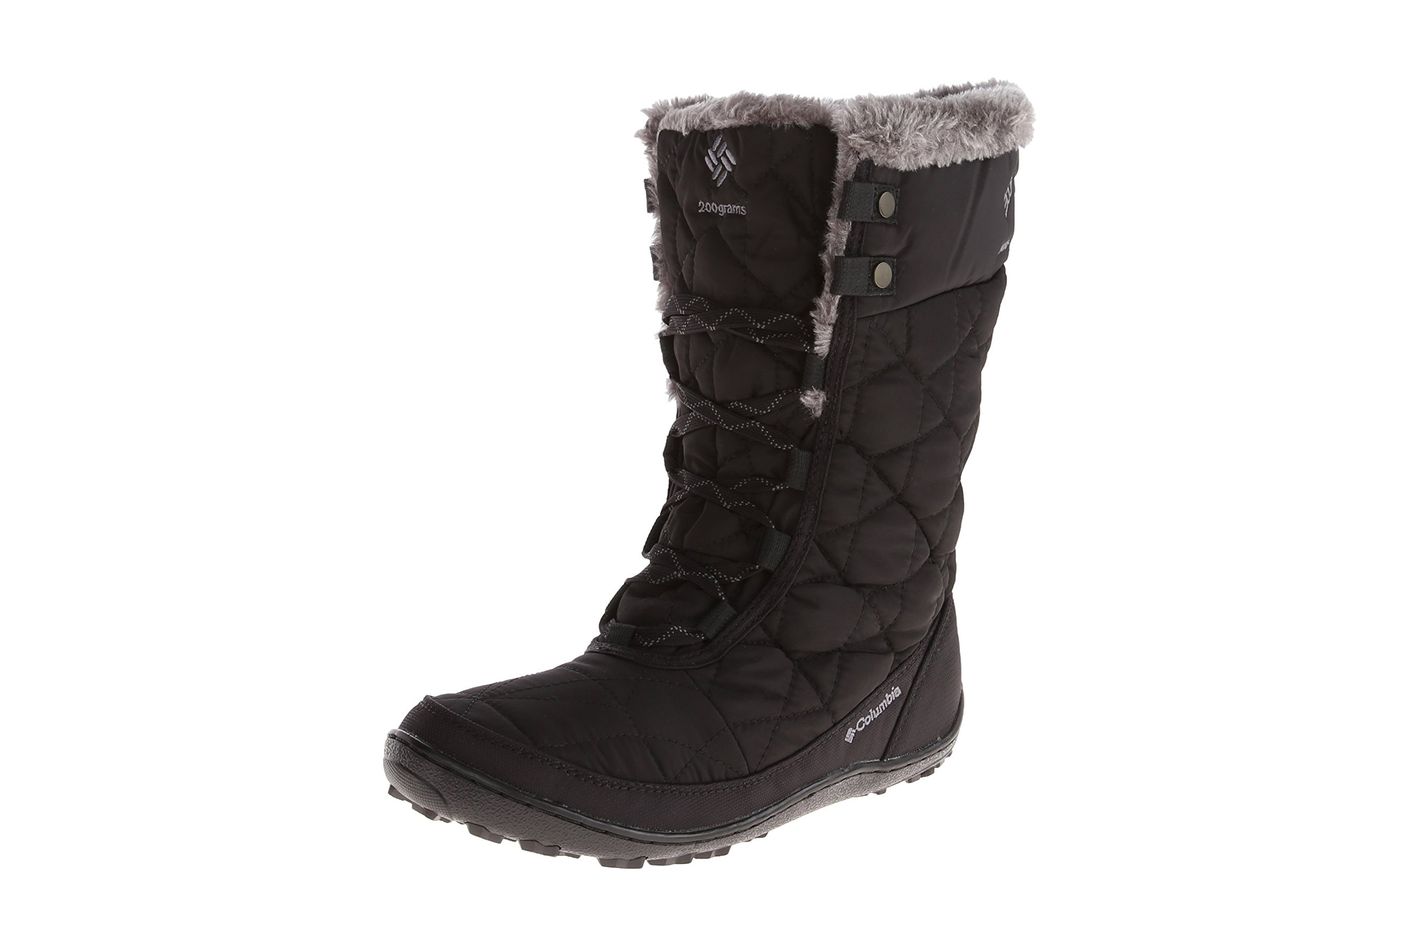 Best Winter Boots on Amazon 17 Options